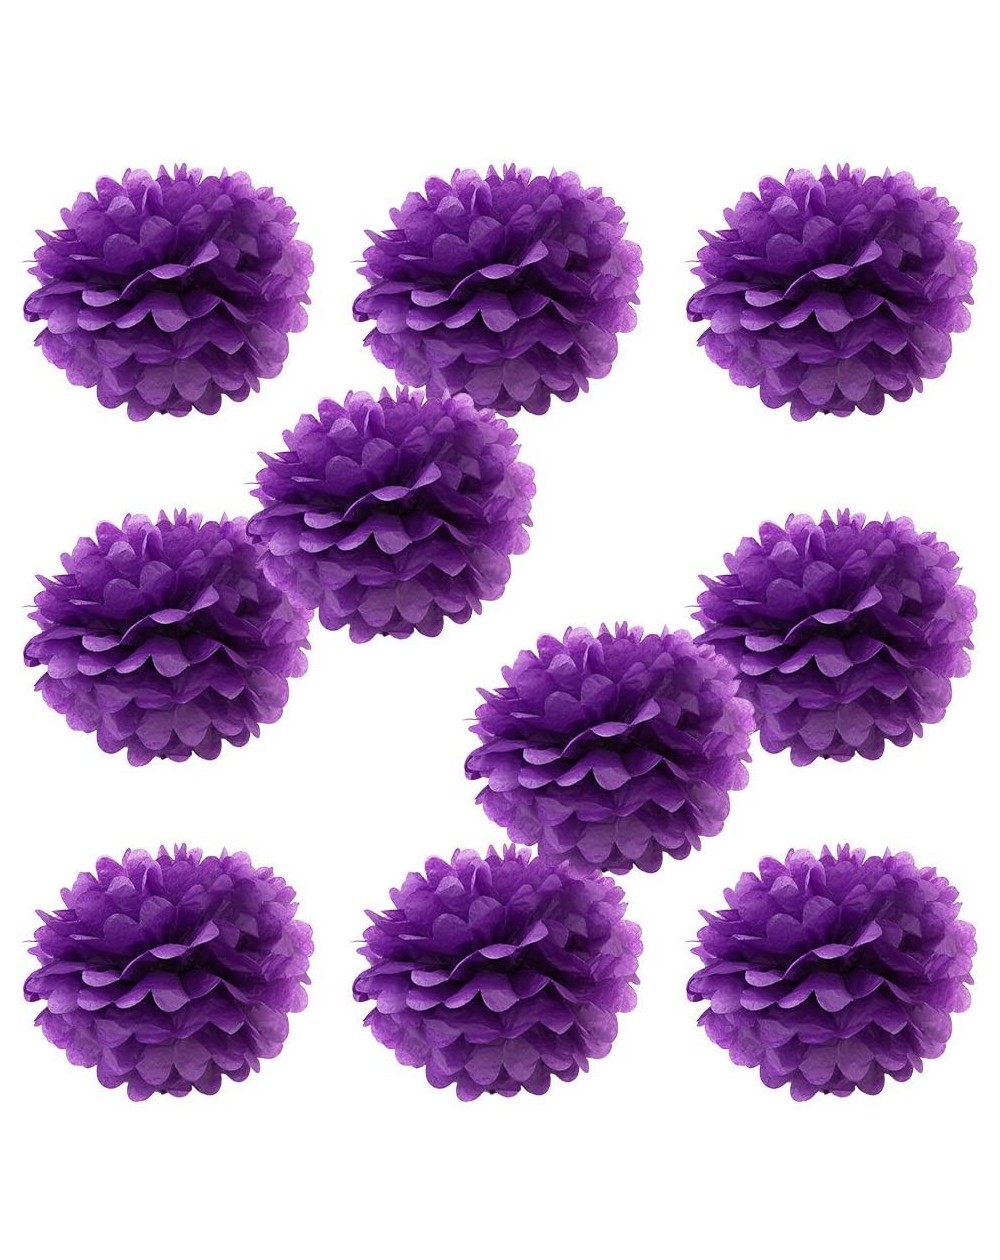 Tissue Pom Poms Set of 10 - Purple 12" - (10 Pack) Tissue Pom Poms Flower Party Decorations for Weddings- Birthday- Bridal- B...